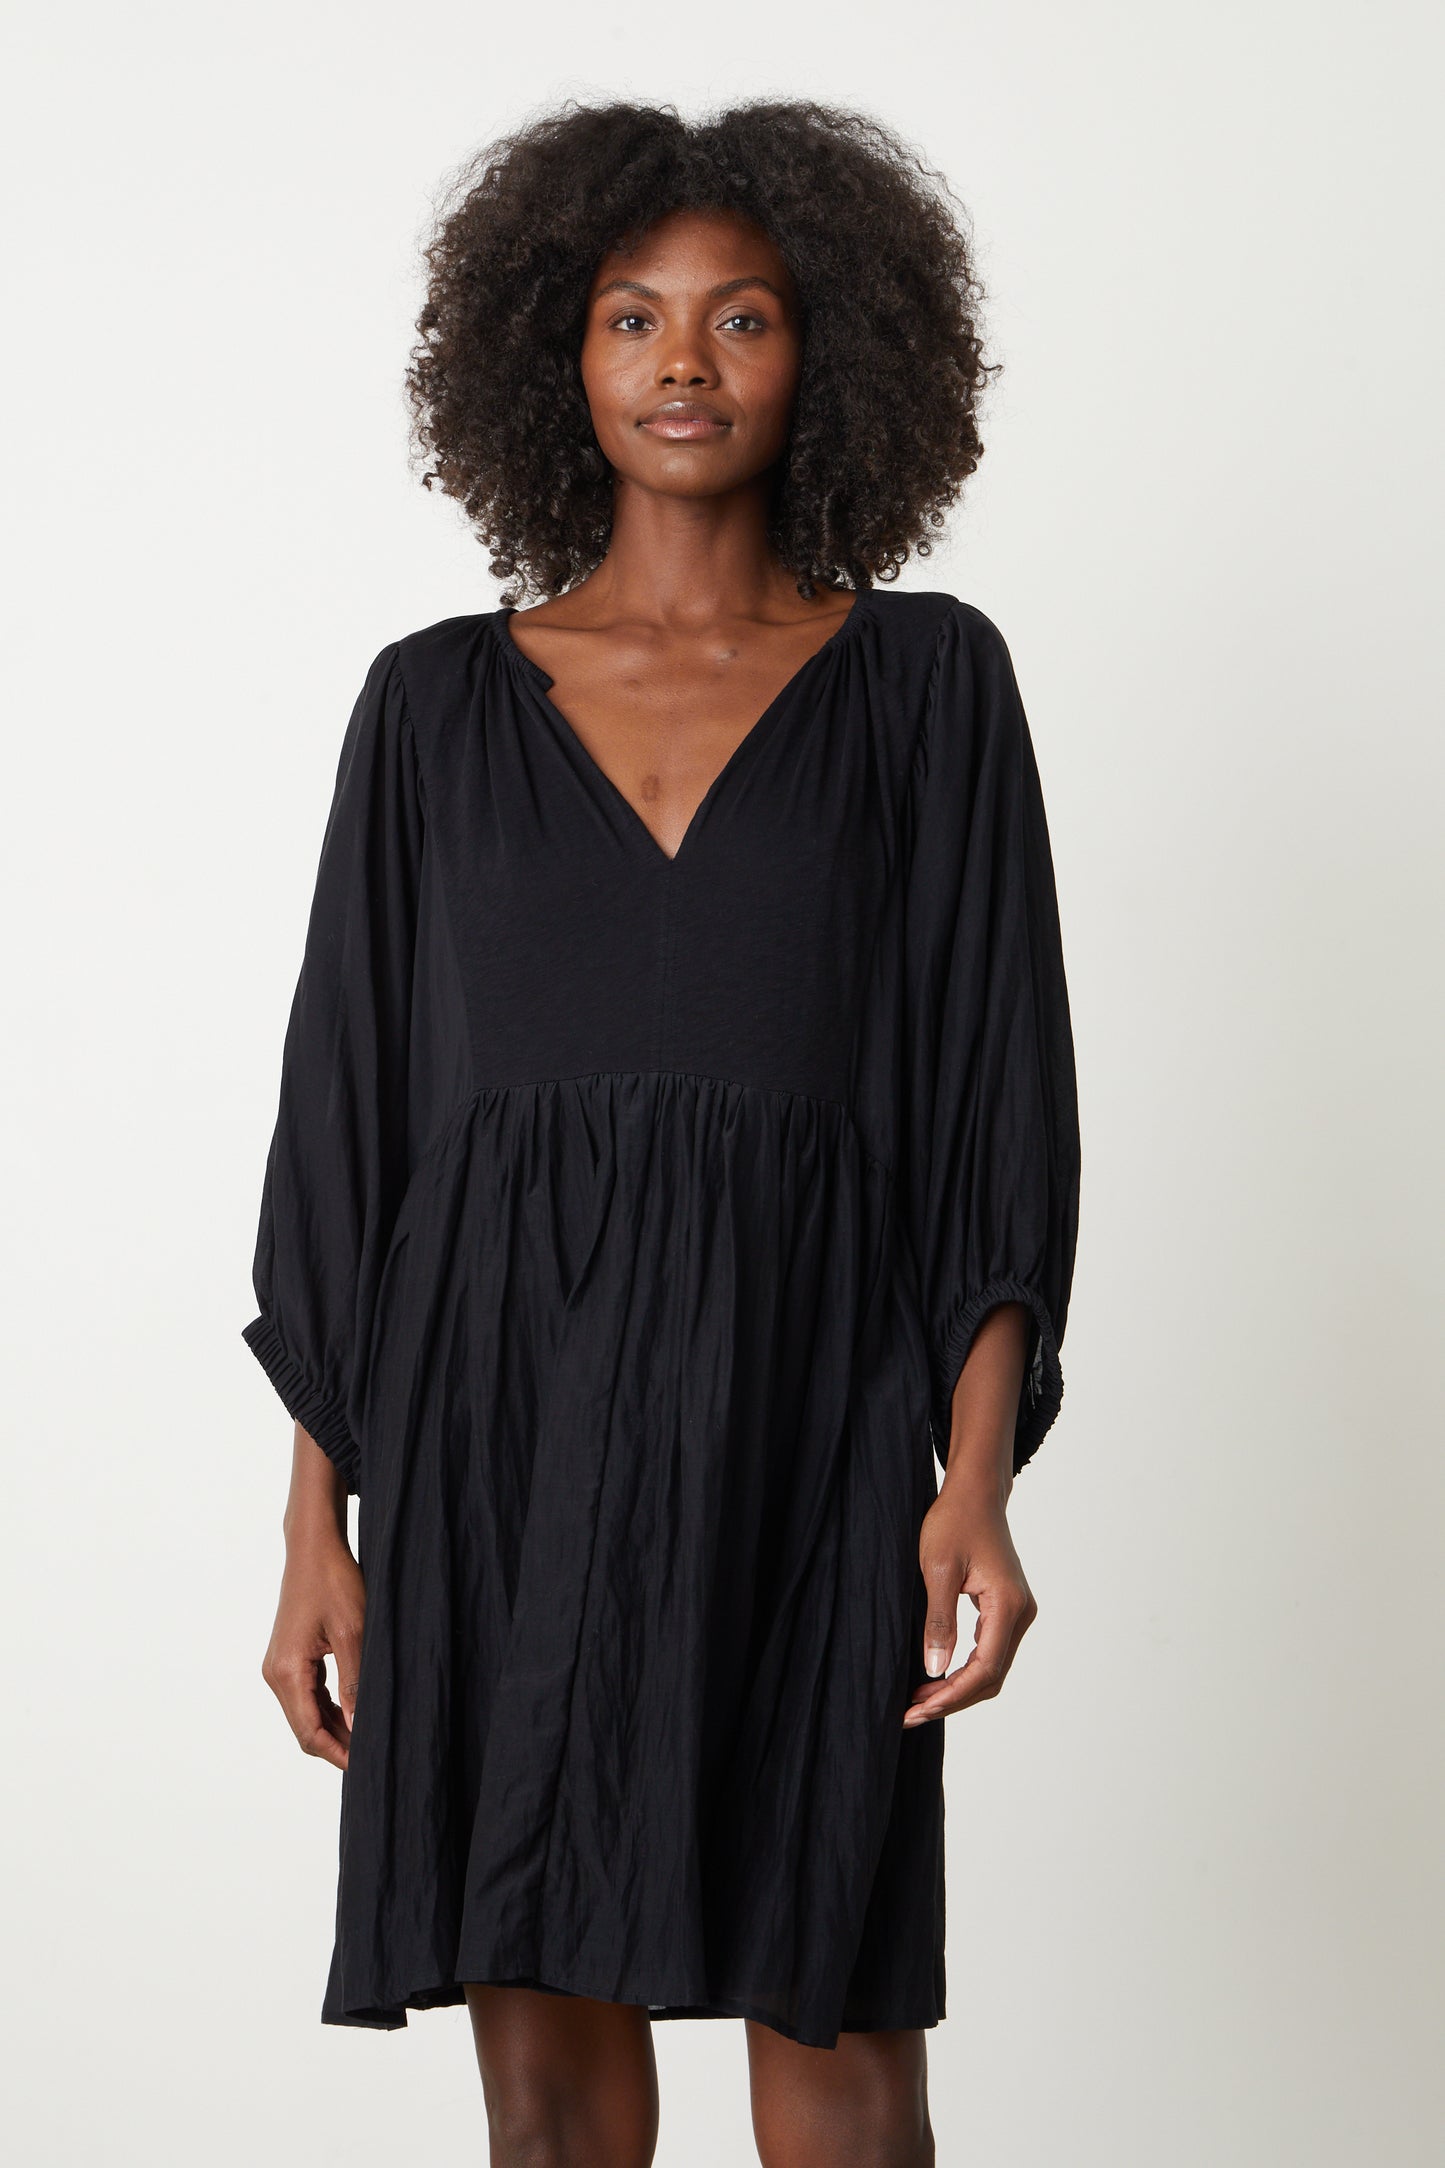 The ERIN SHIRRED WAIST DRESS by Velvet by Graham & Spencer in black has a v-neck and a ruffled hem.-26577354490049